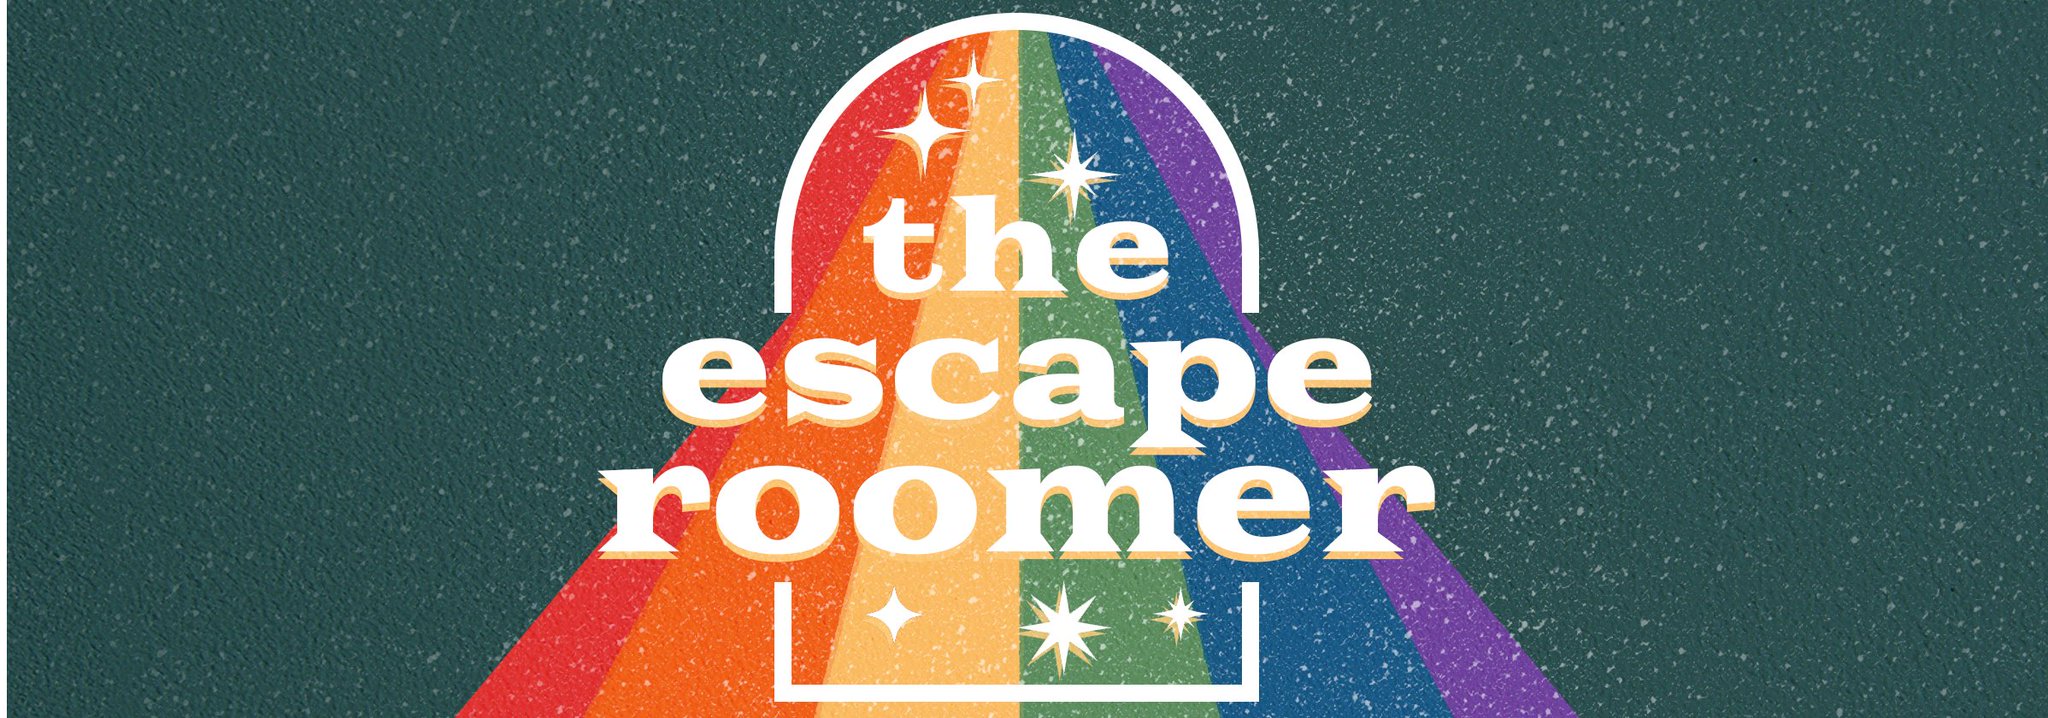 The Escape Room-er